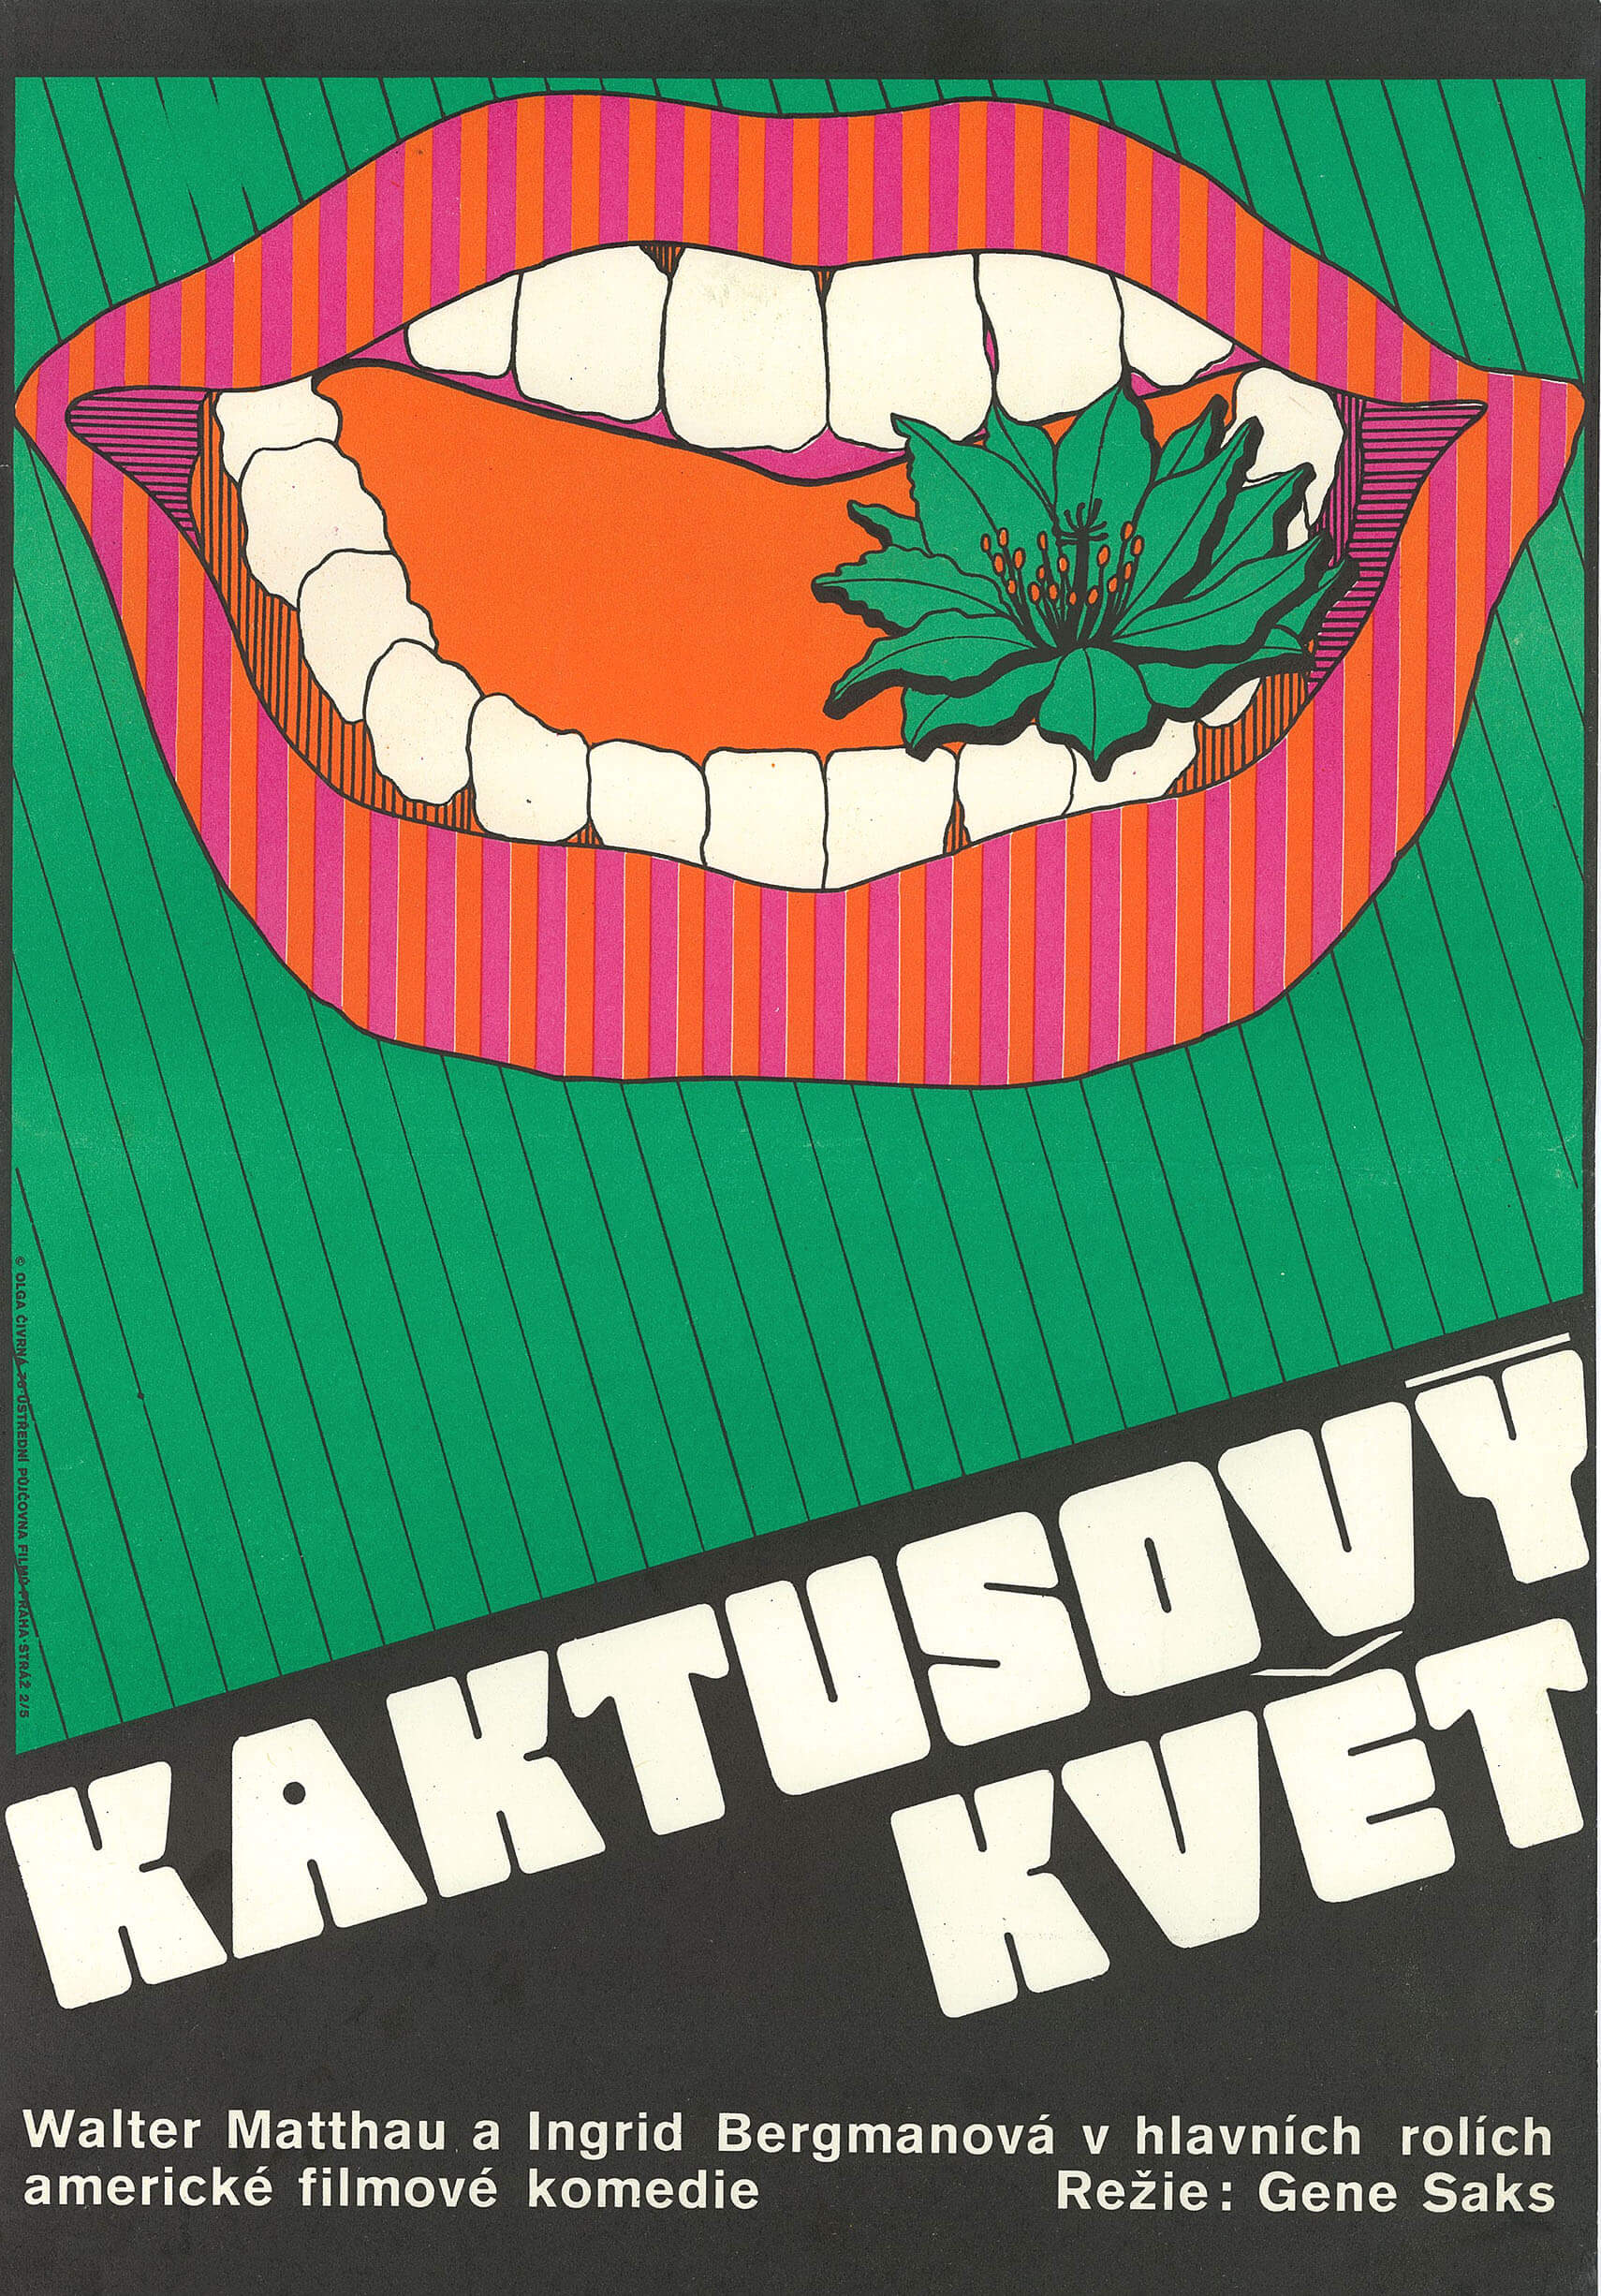 Cactus Flower - Czech Movie Poster Gallery